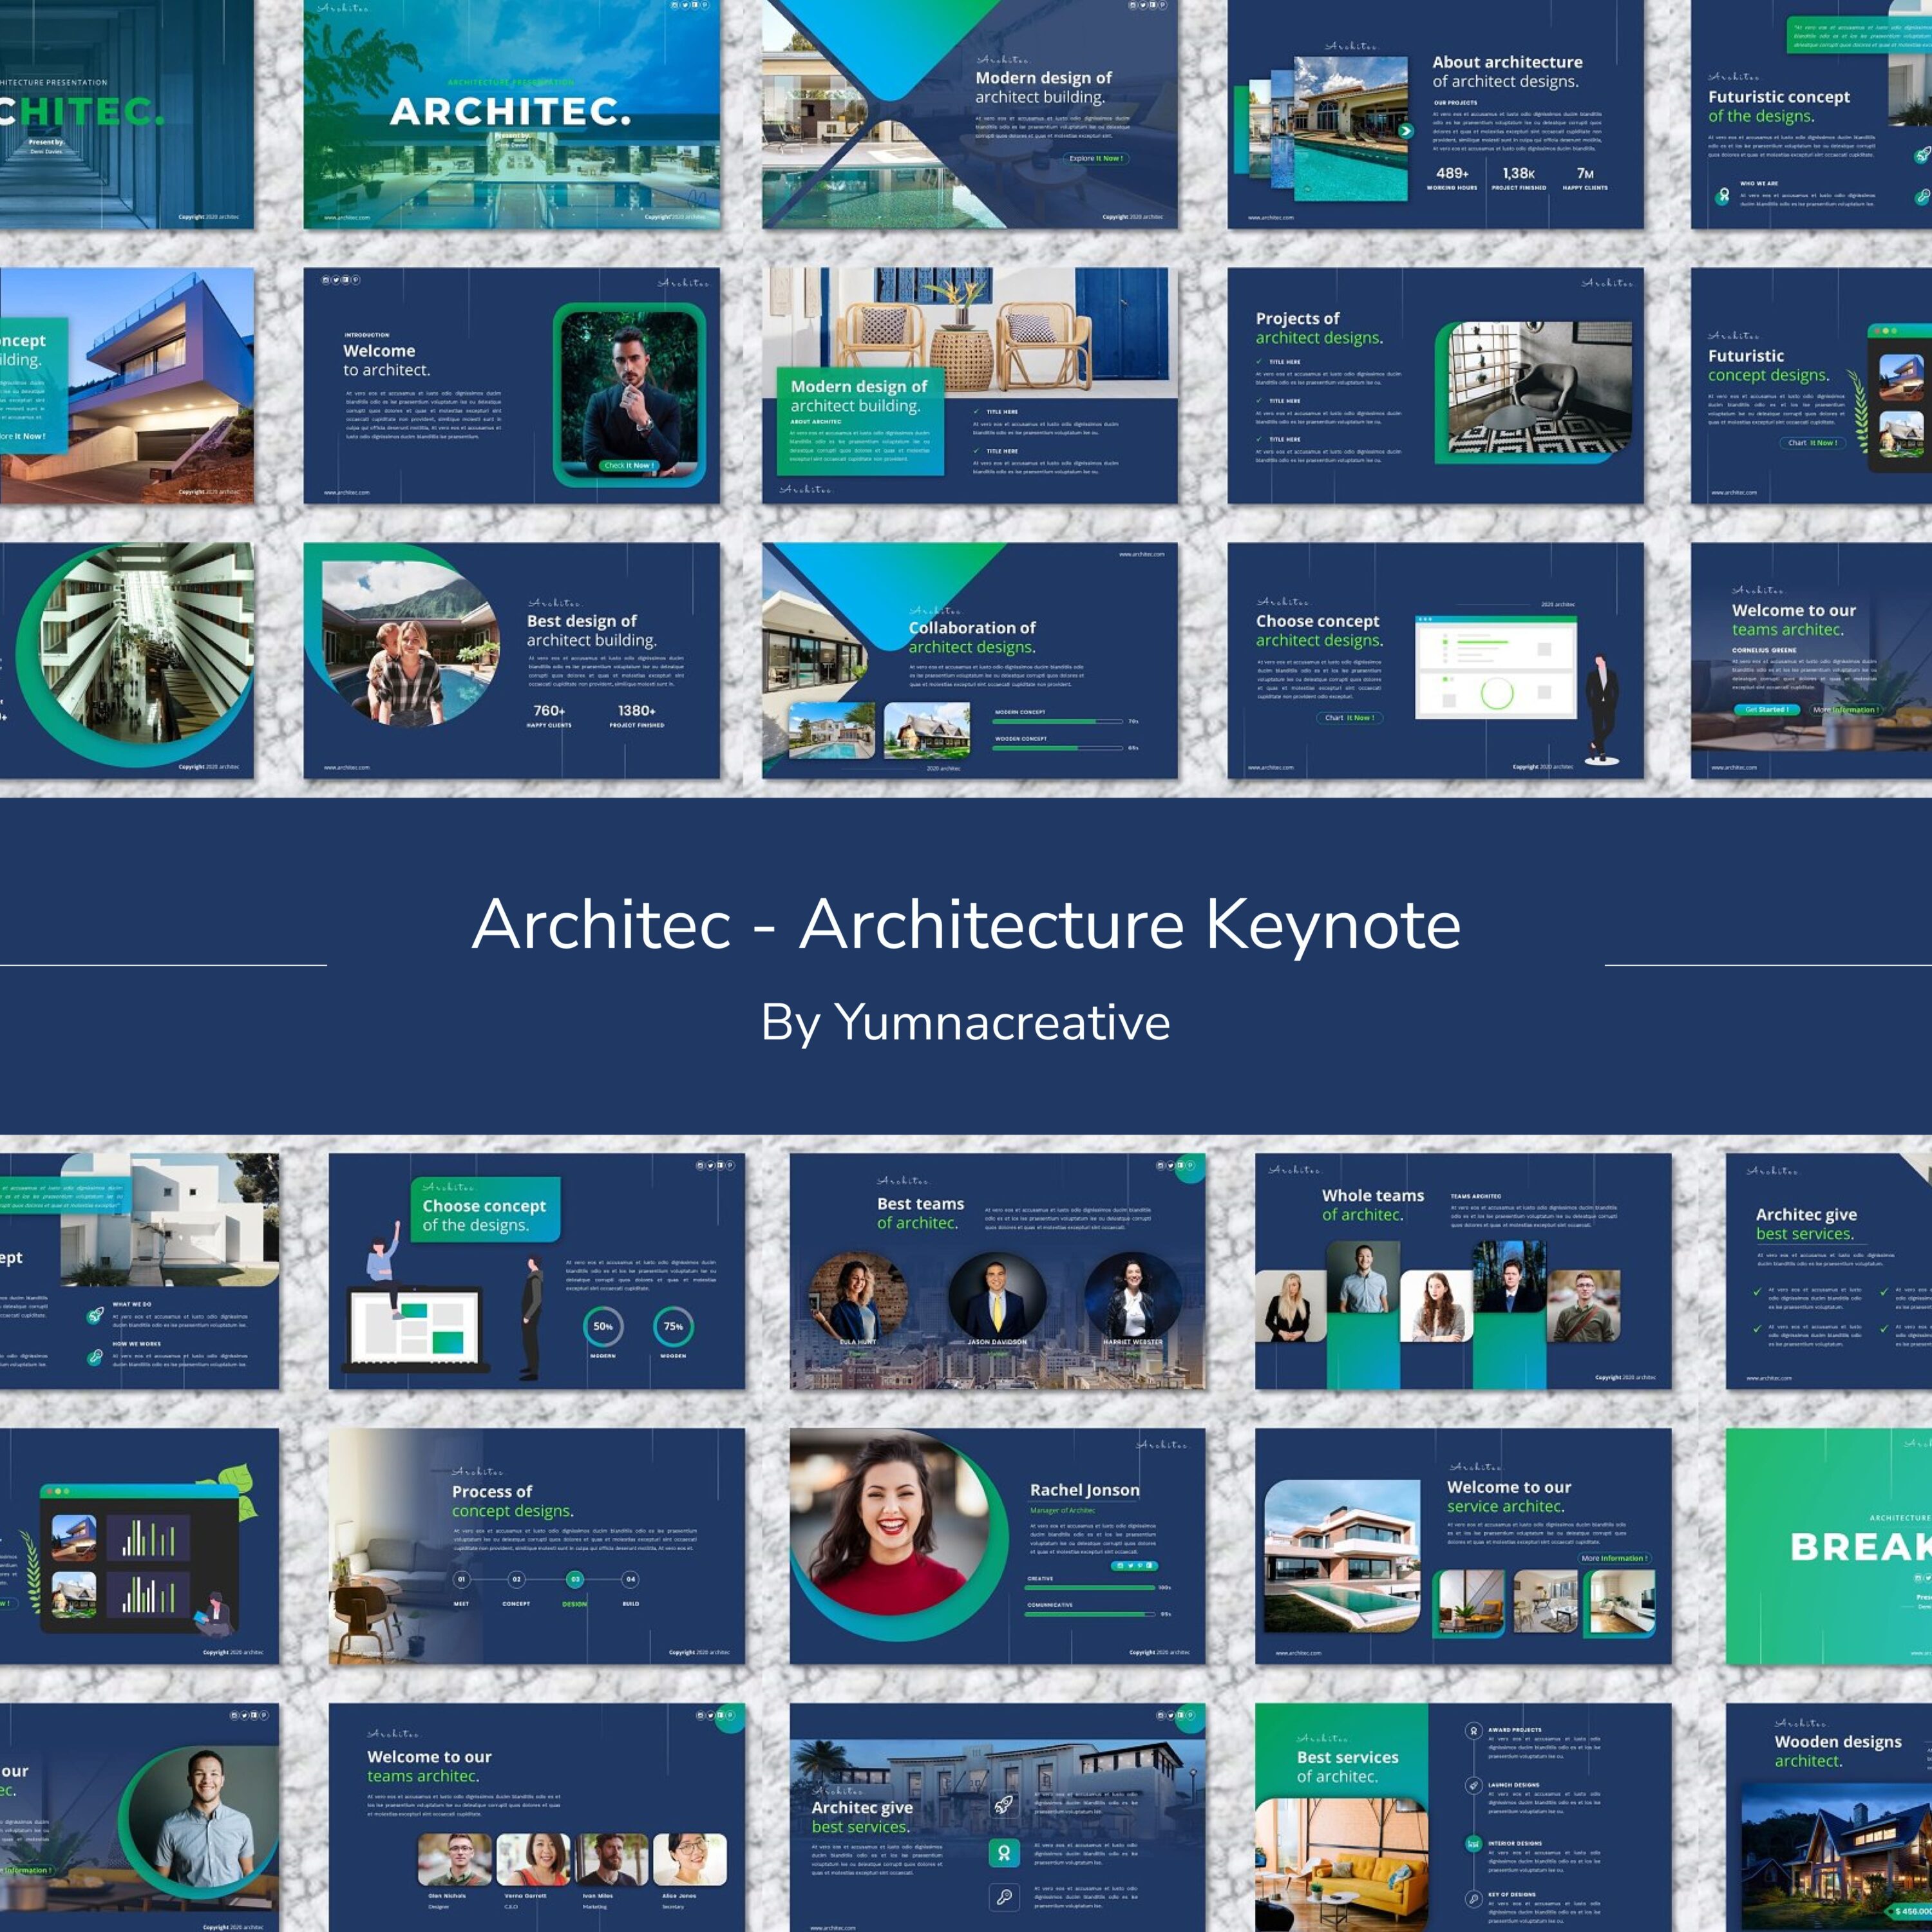 Architec architecture keynote - main image preview.